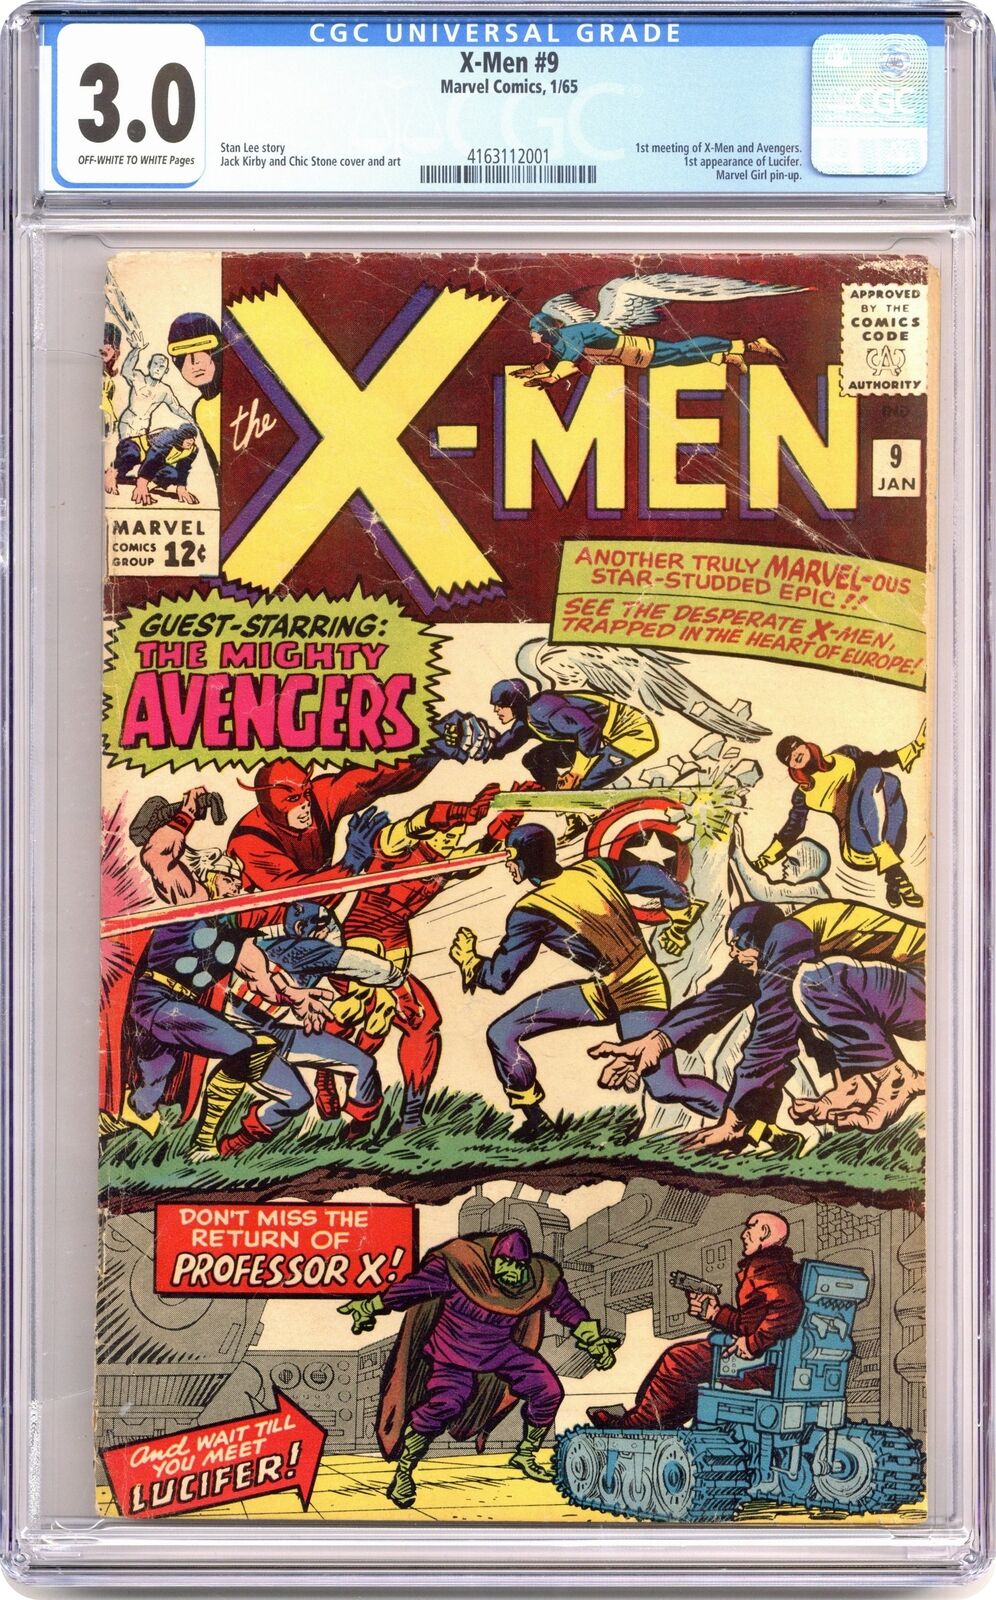 Uncanny X-Men #9 CGC 3.0 1965 4163112001 1st Avengers/X-Men crossover